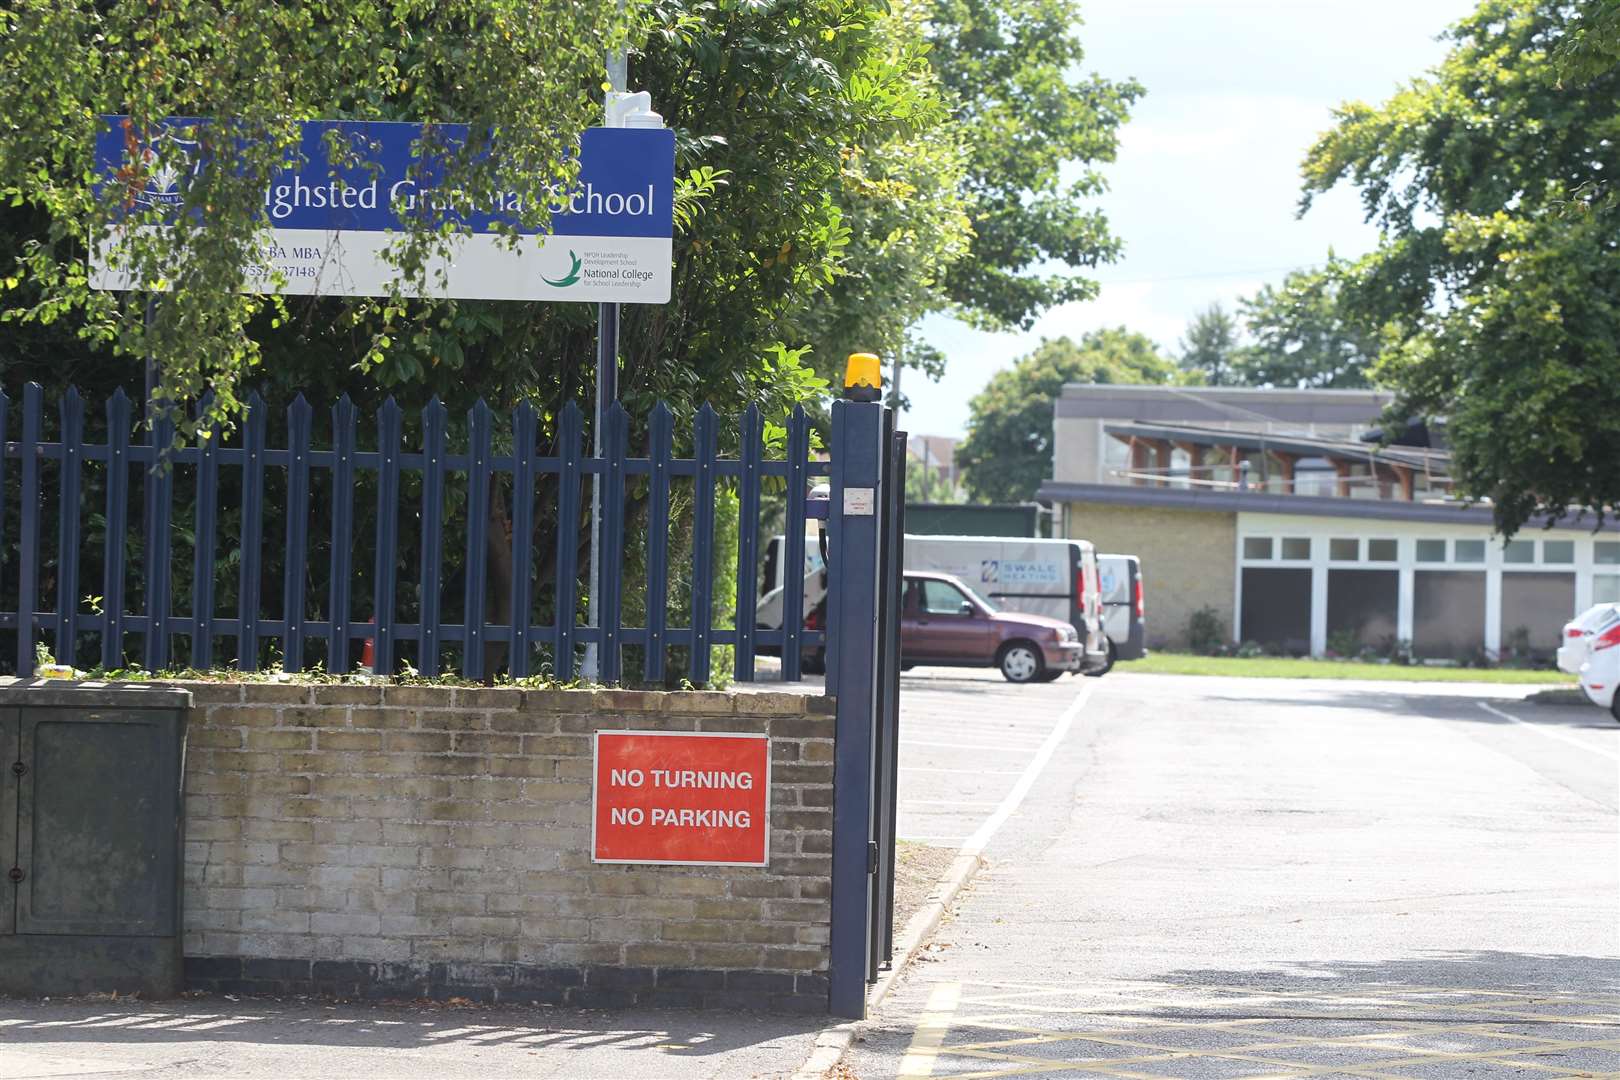 Stock photo of Highsted Grammar School Picture: John Westhrop